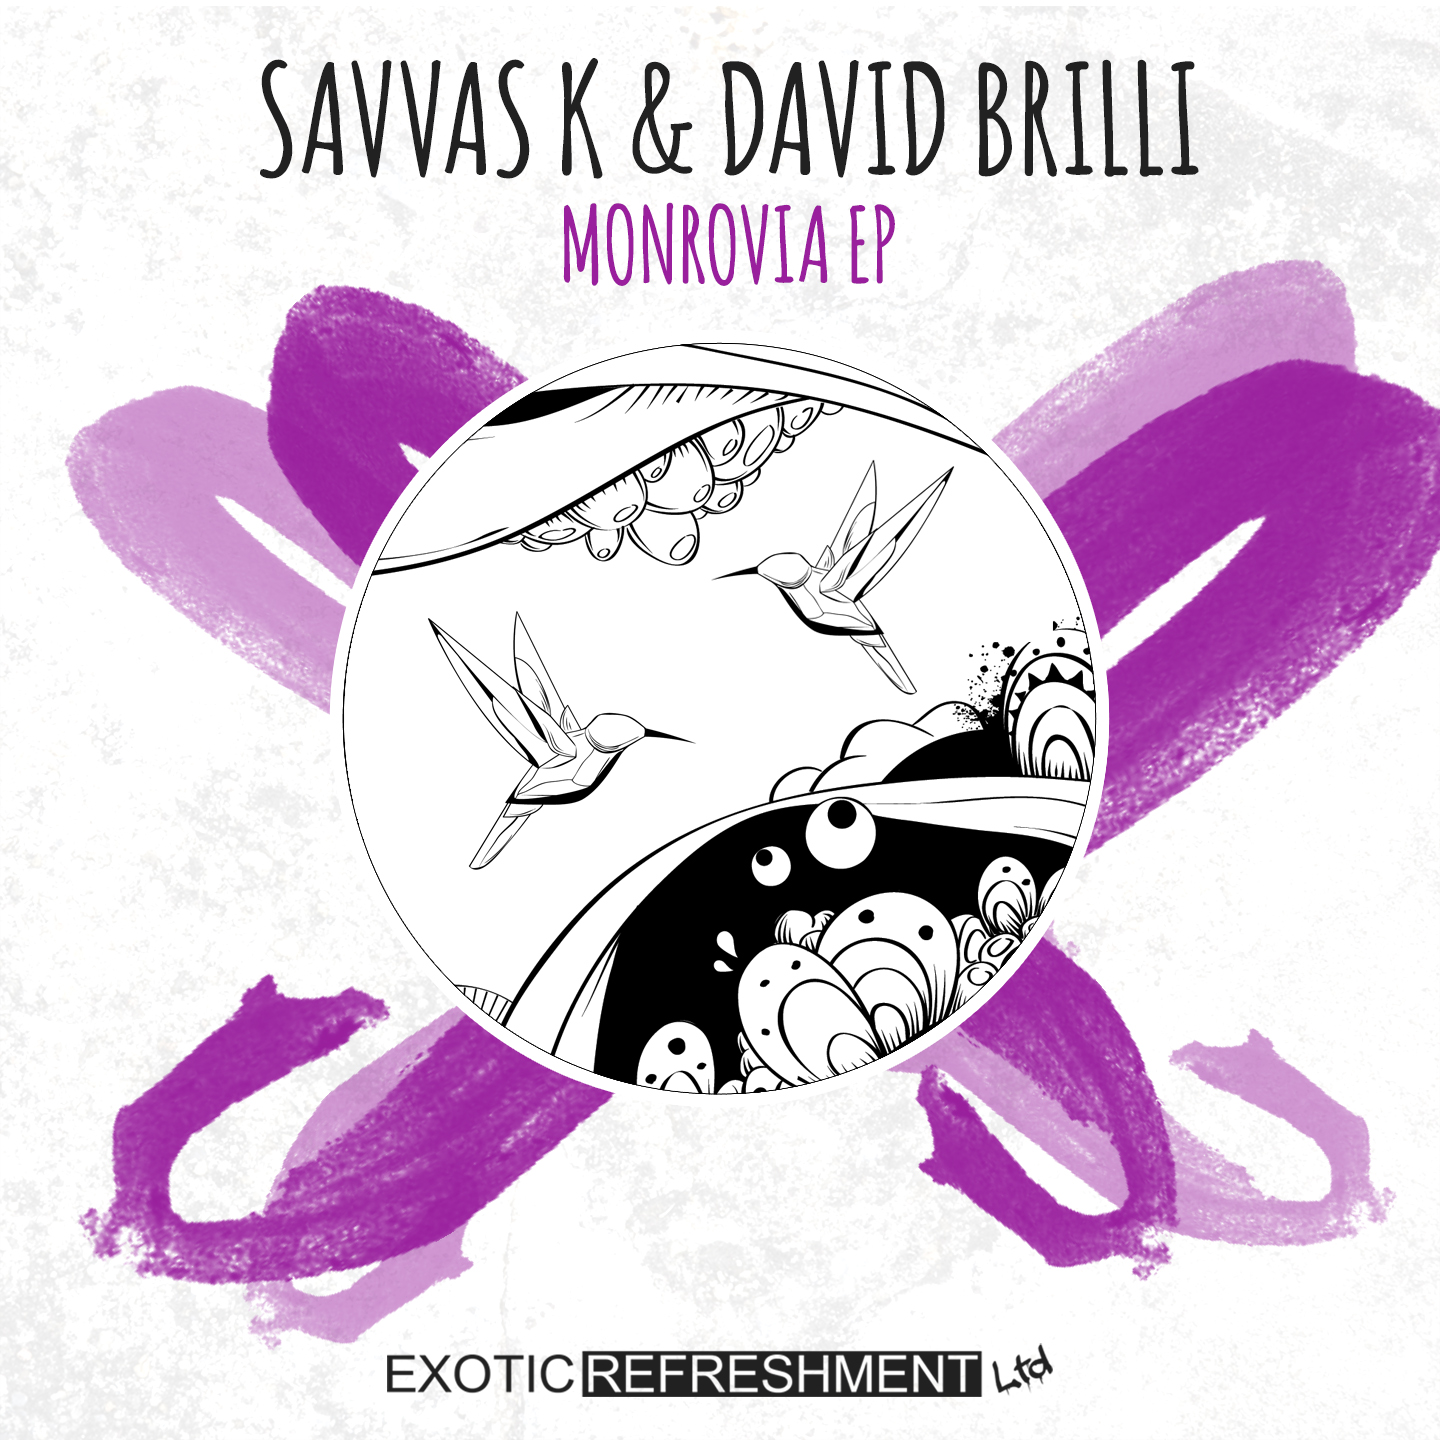 Savvas K & David Brilli - Monrovia EP